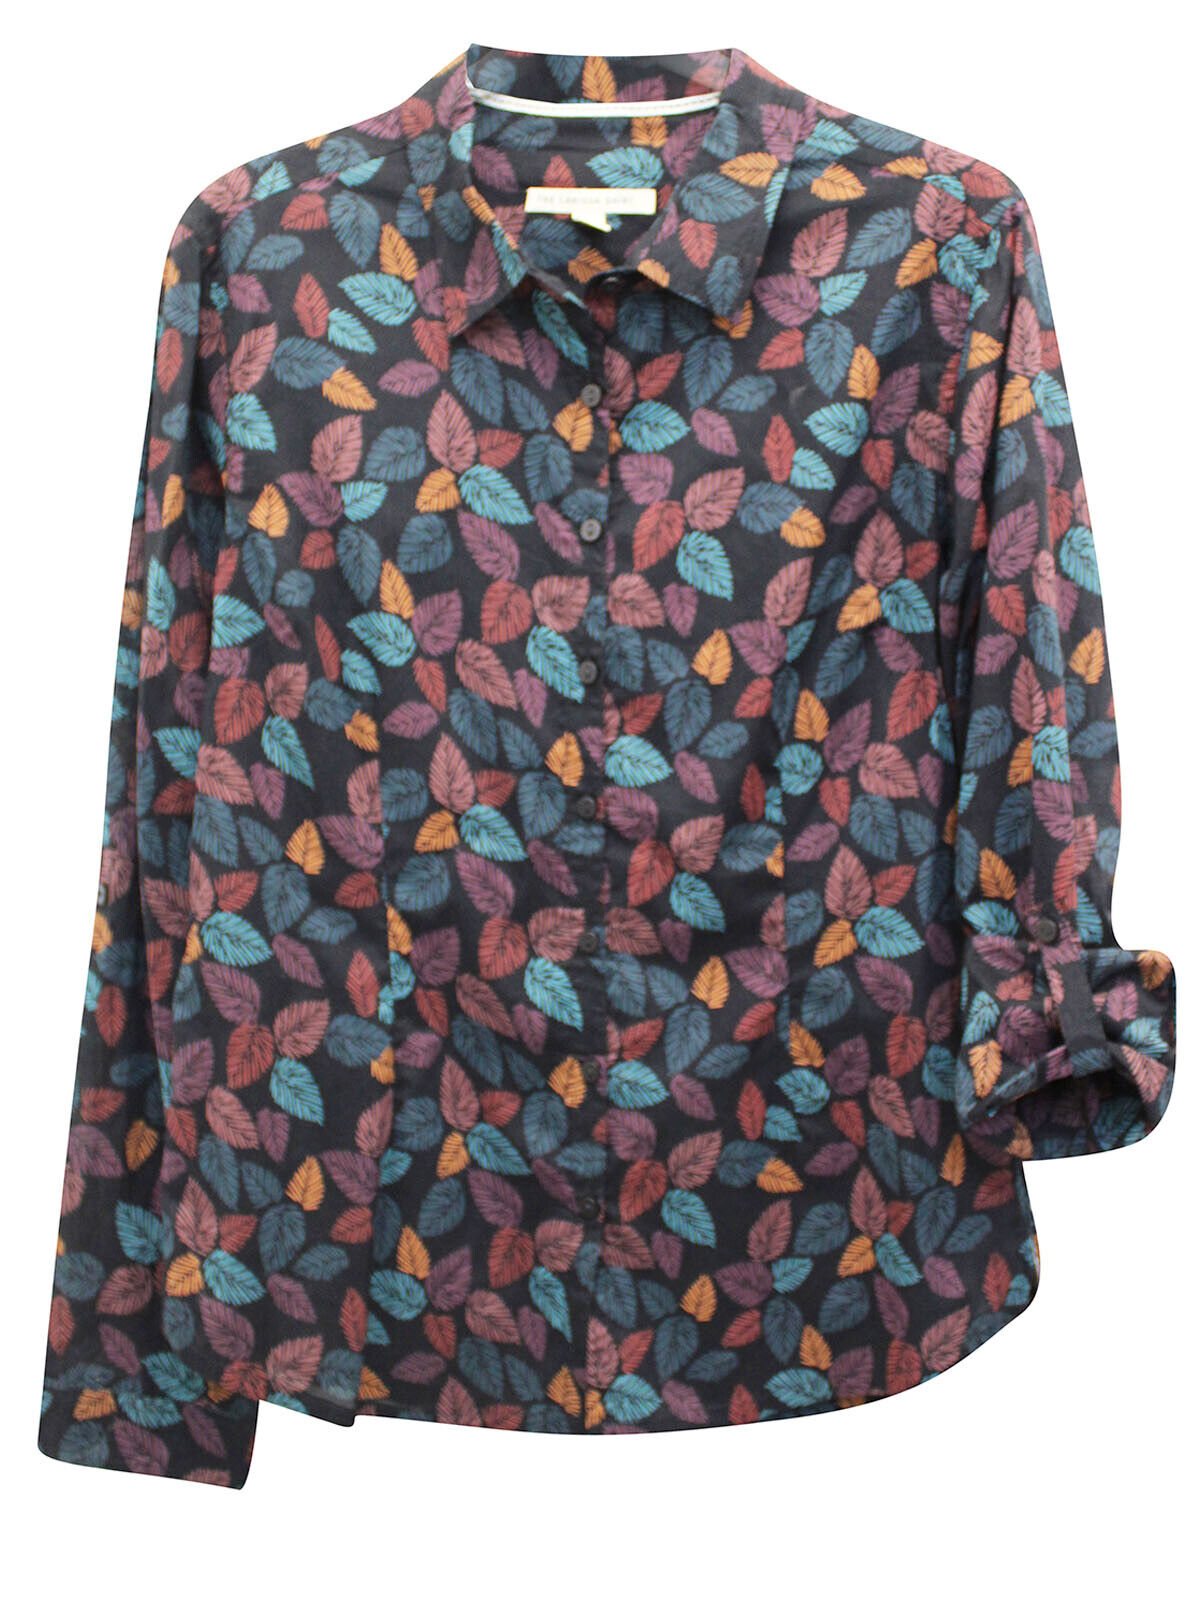 EX Seasalt Slate Leaves Onyx Larissa Organic Cotton Shirt Sizes 10-28 RRP £45